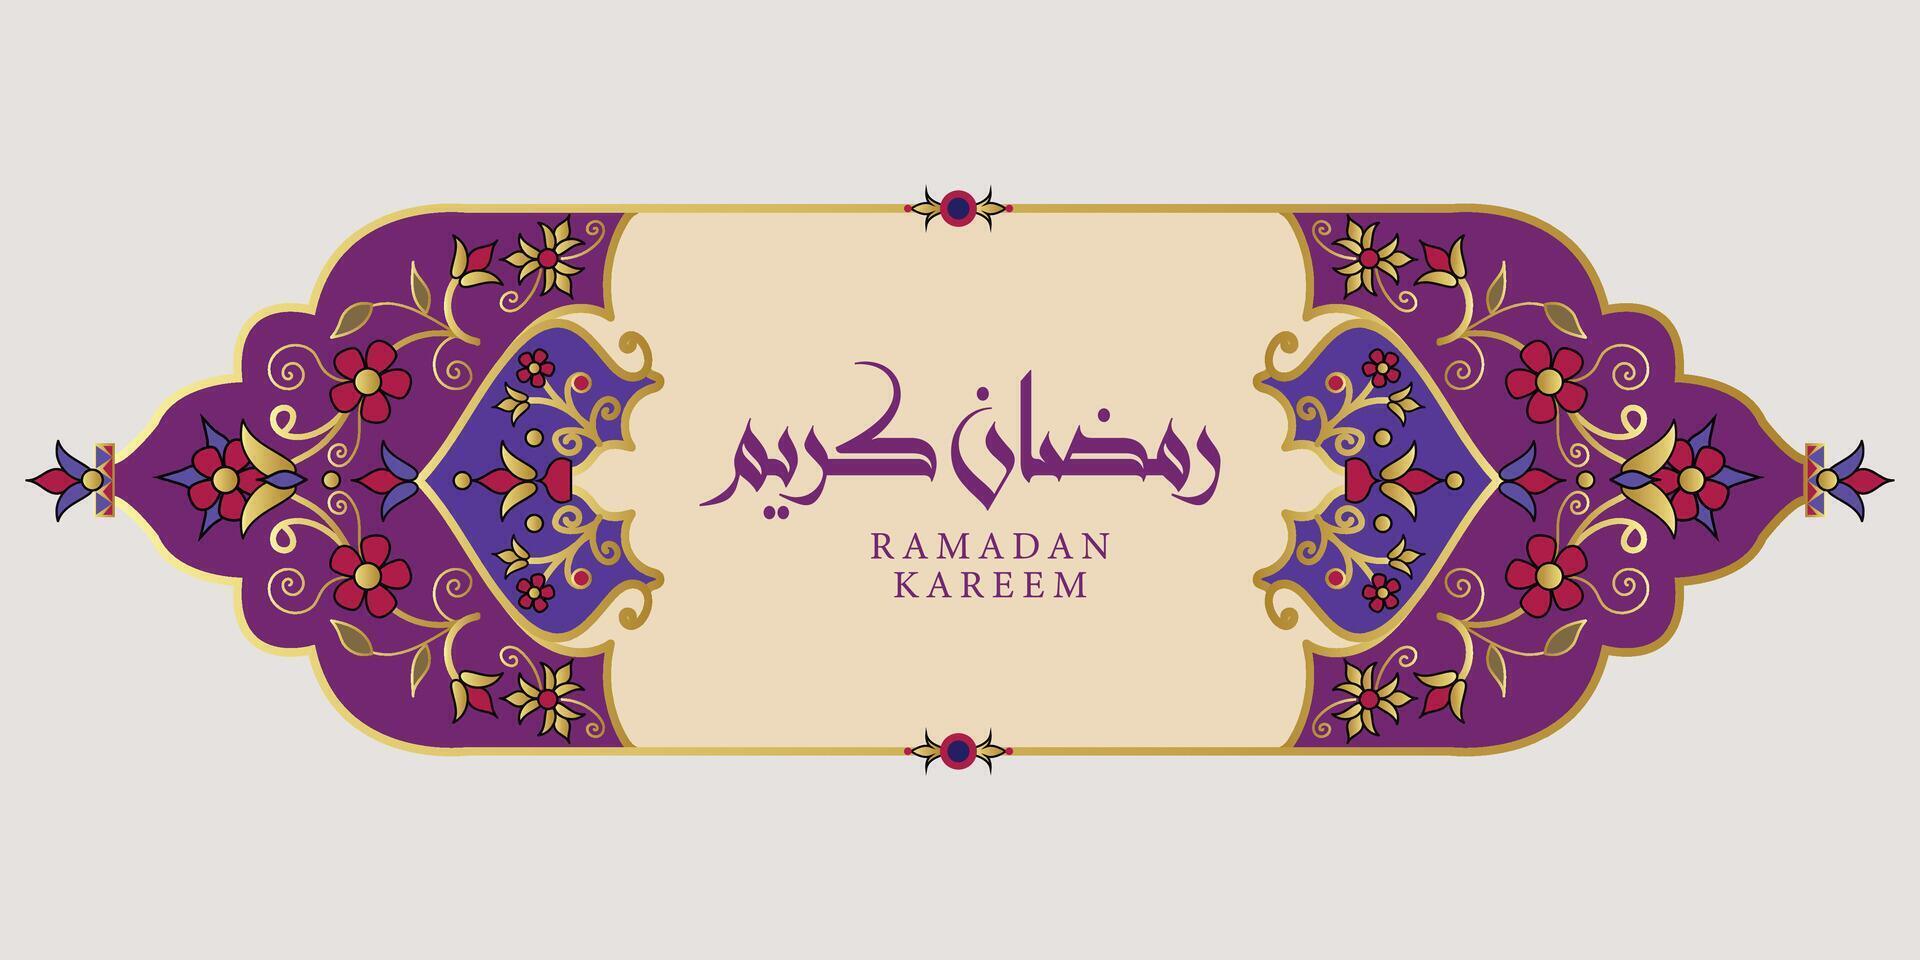 complexe turc texte frontière avec Ramadan kareem texte vecteur